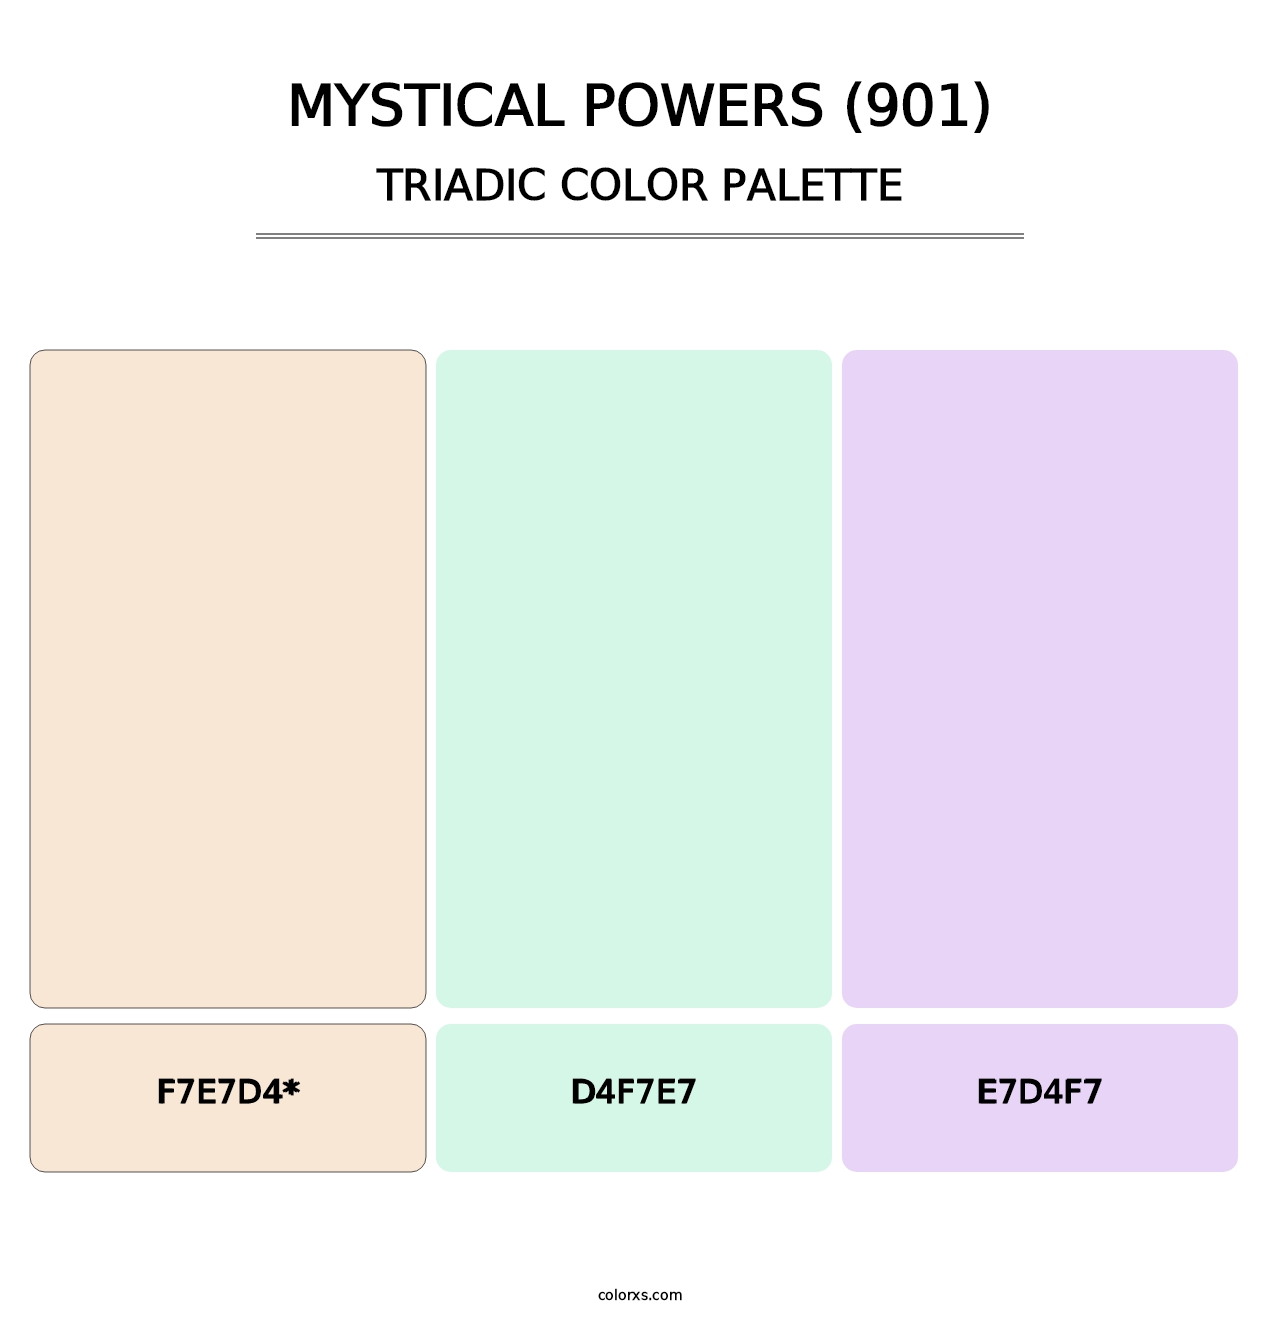 Mystical Powers (901) - Triadic Color Palette